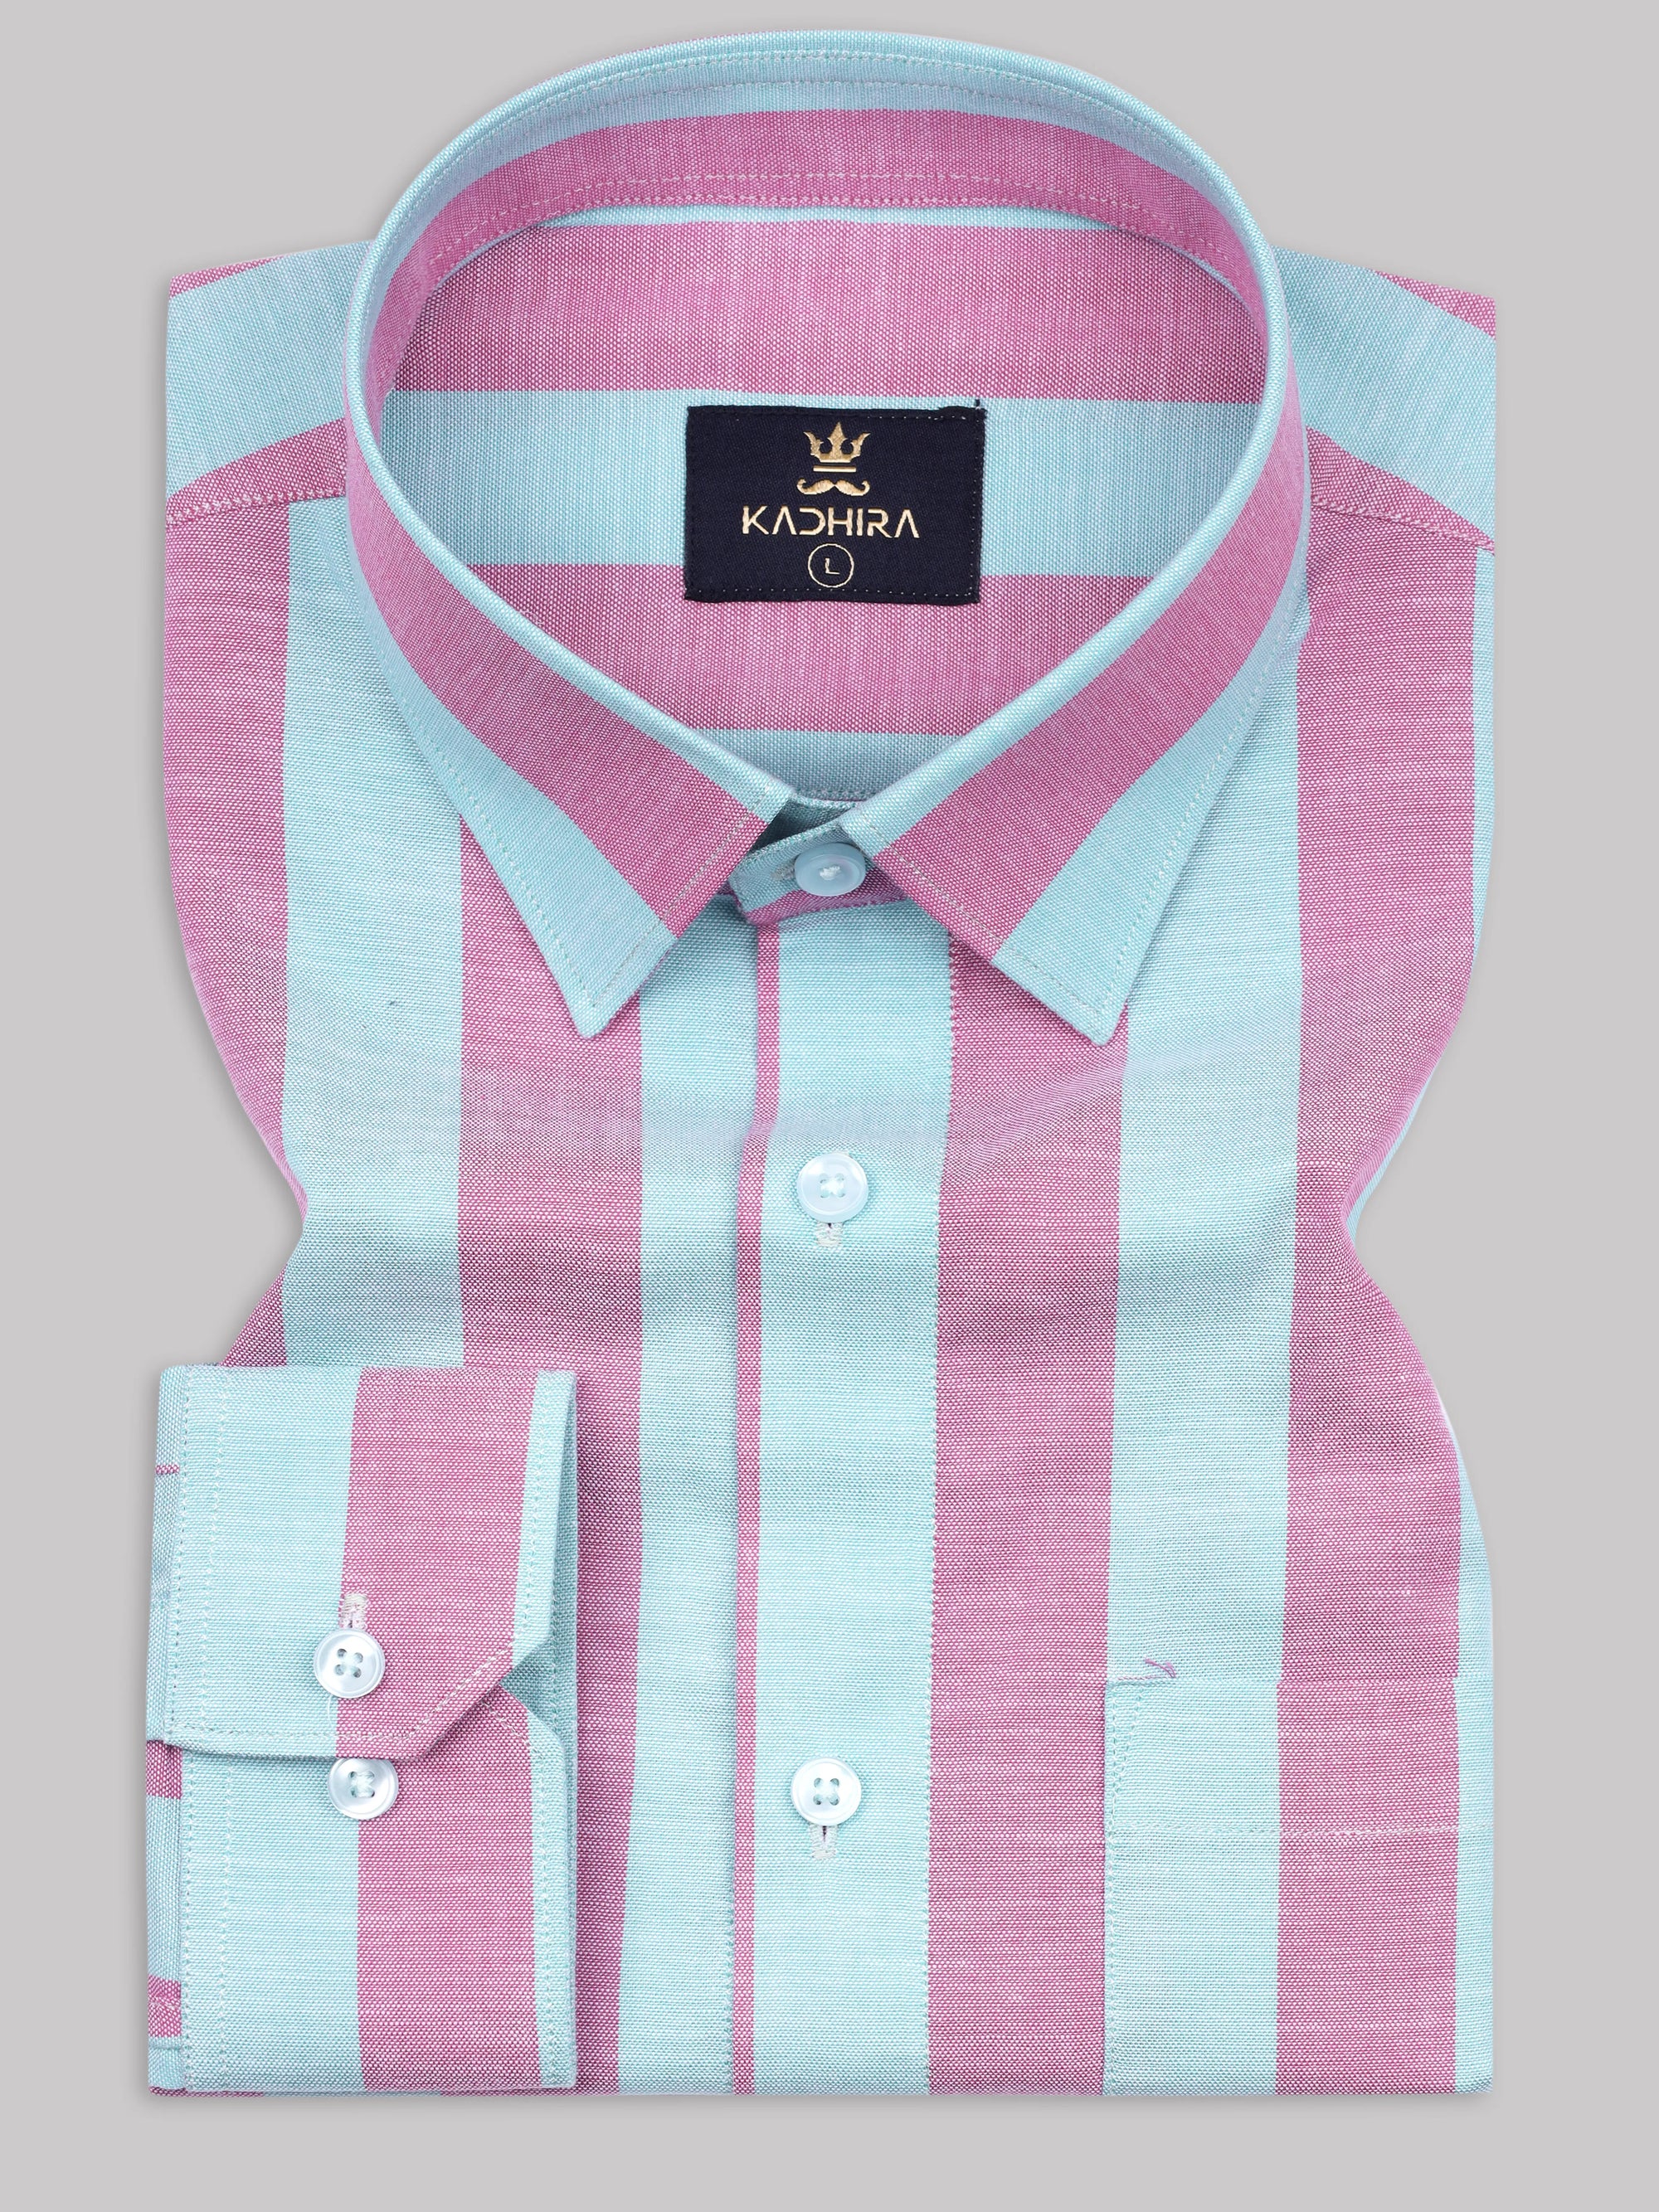 Pink Blue striped Premium Cotton Shirt-[ON SALE]